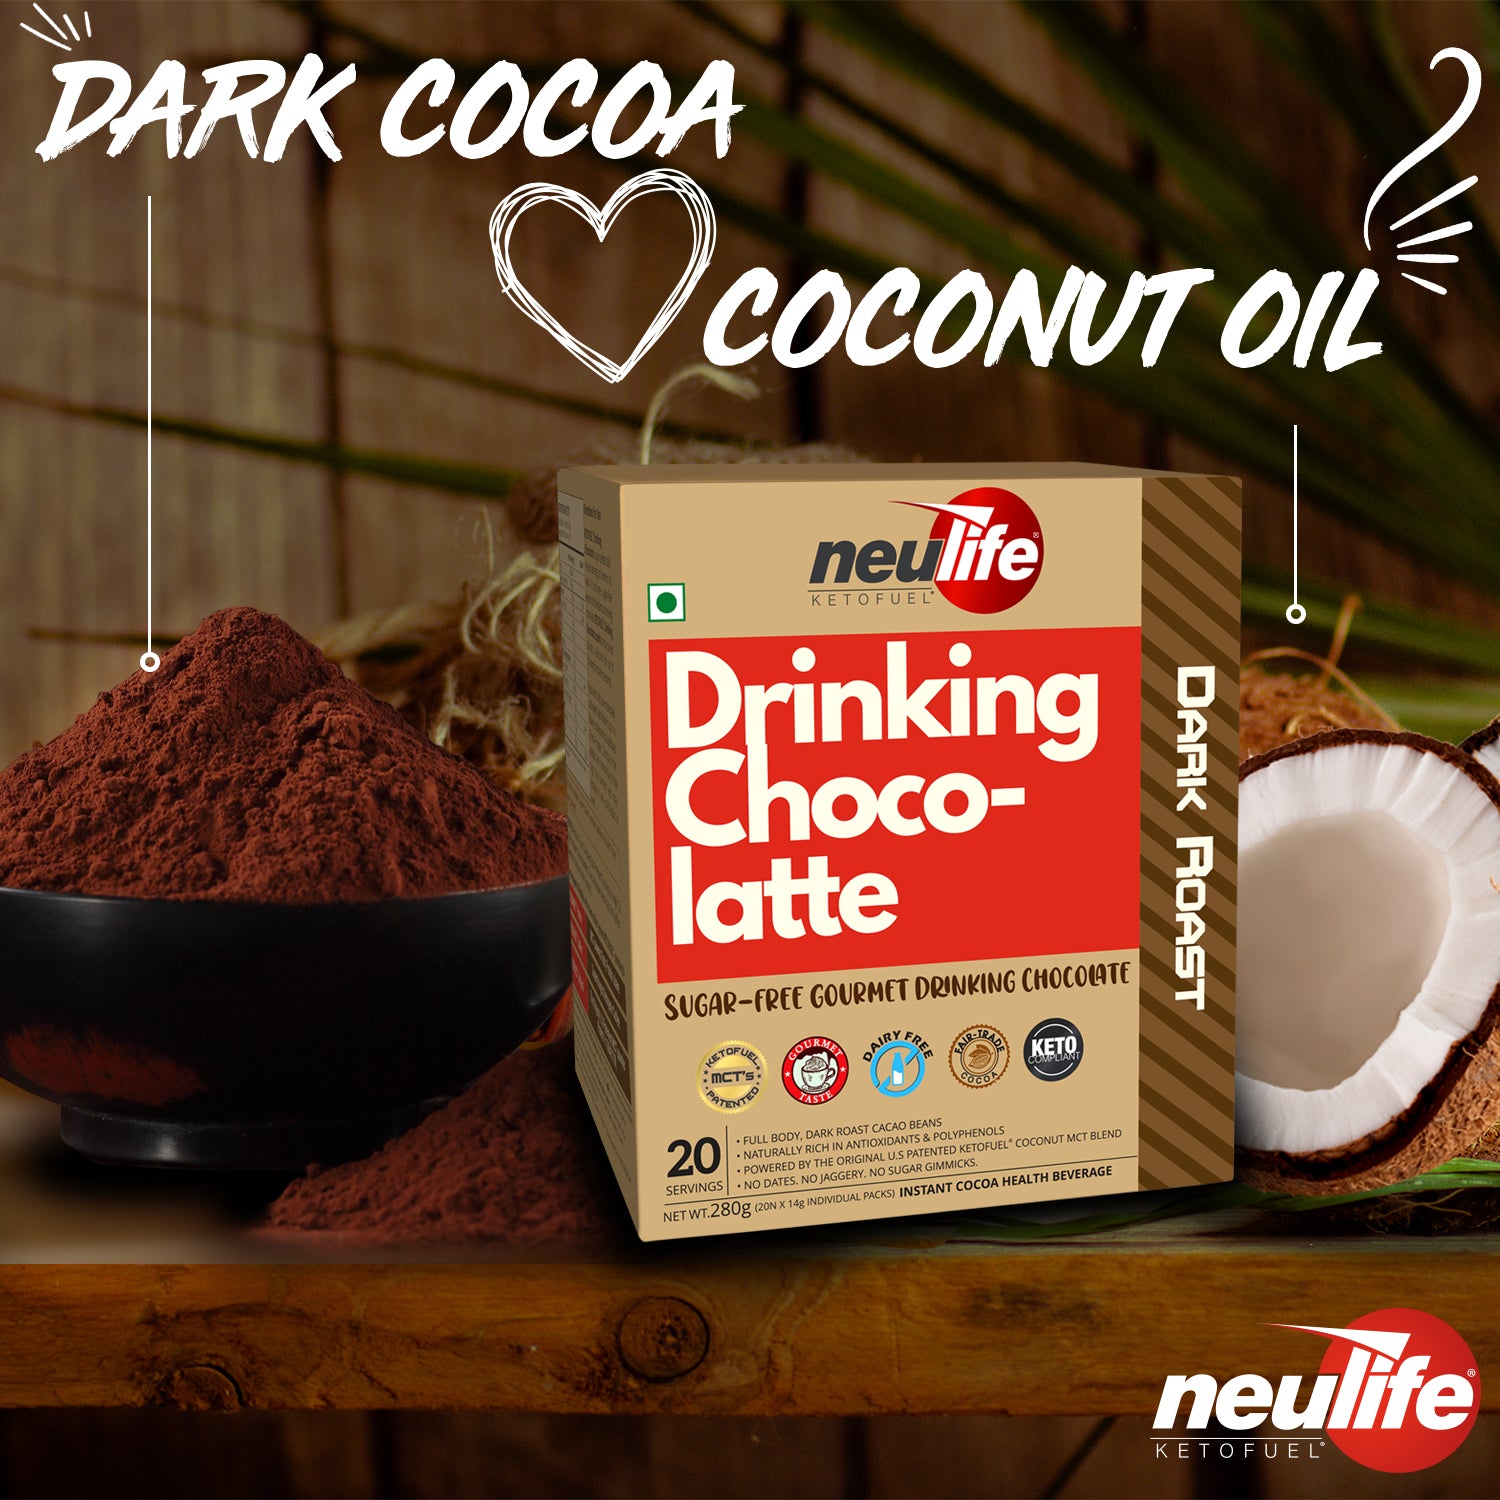 Drinking Chocolate- Dark Cocoa and Coconut Oil